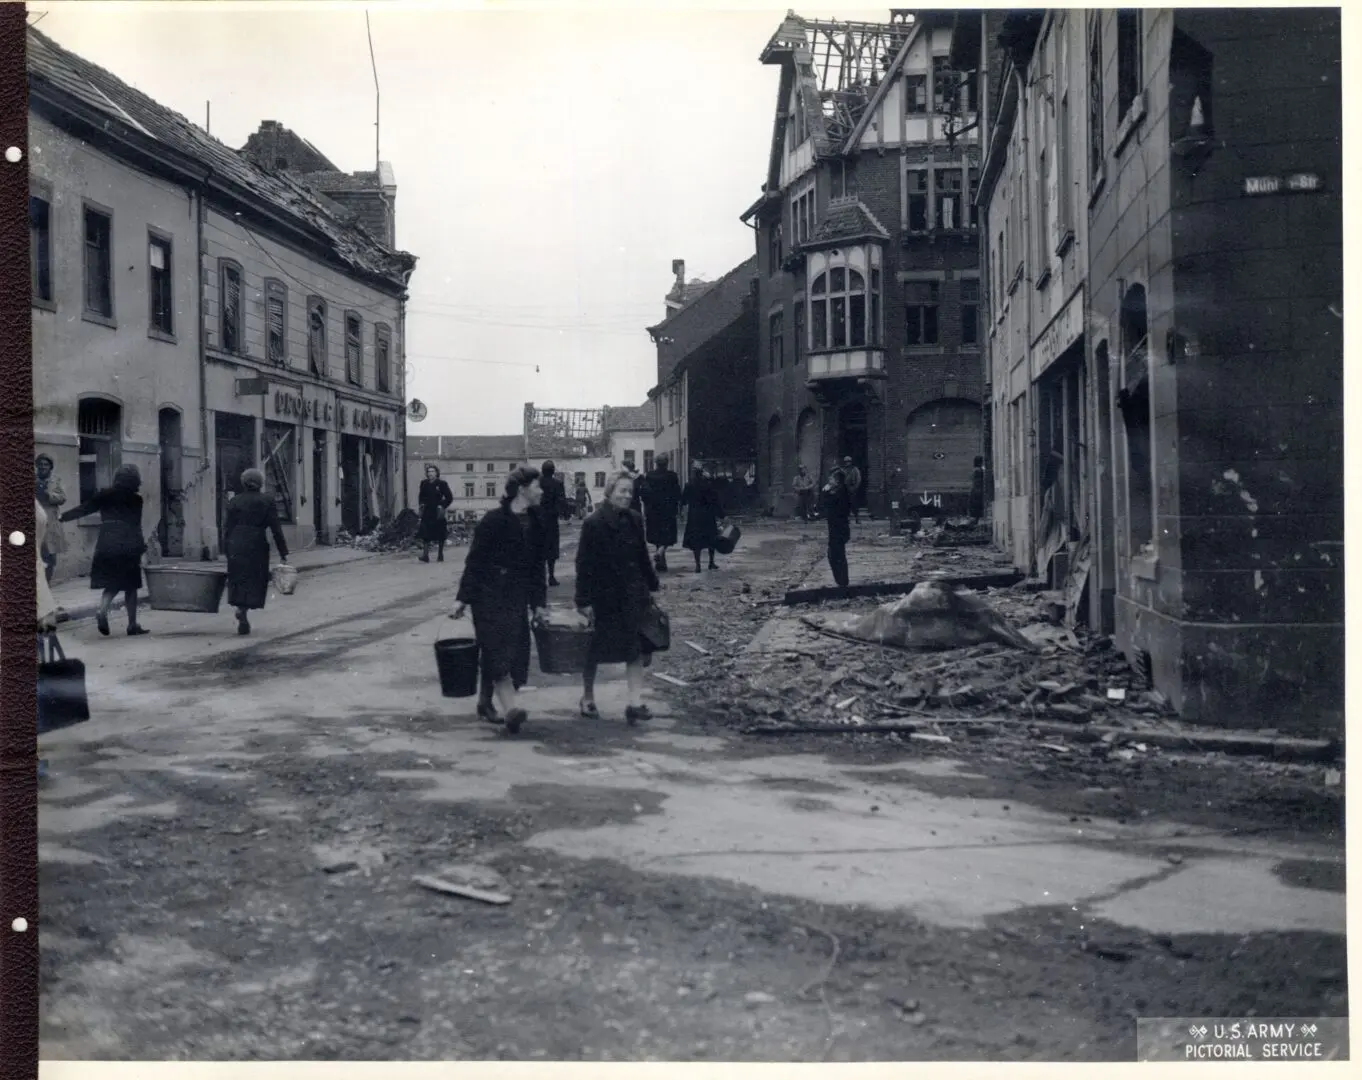 American infantrymen advance through a destroyed town